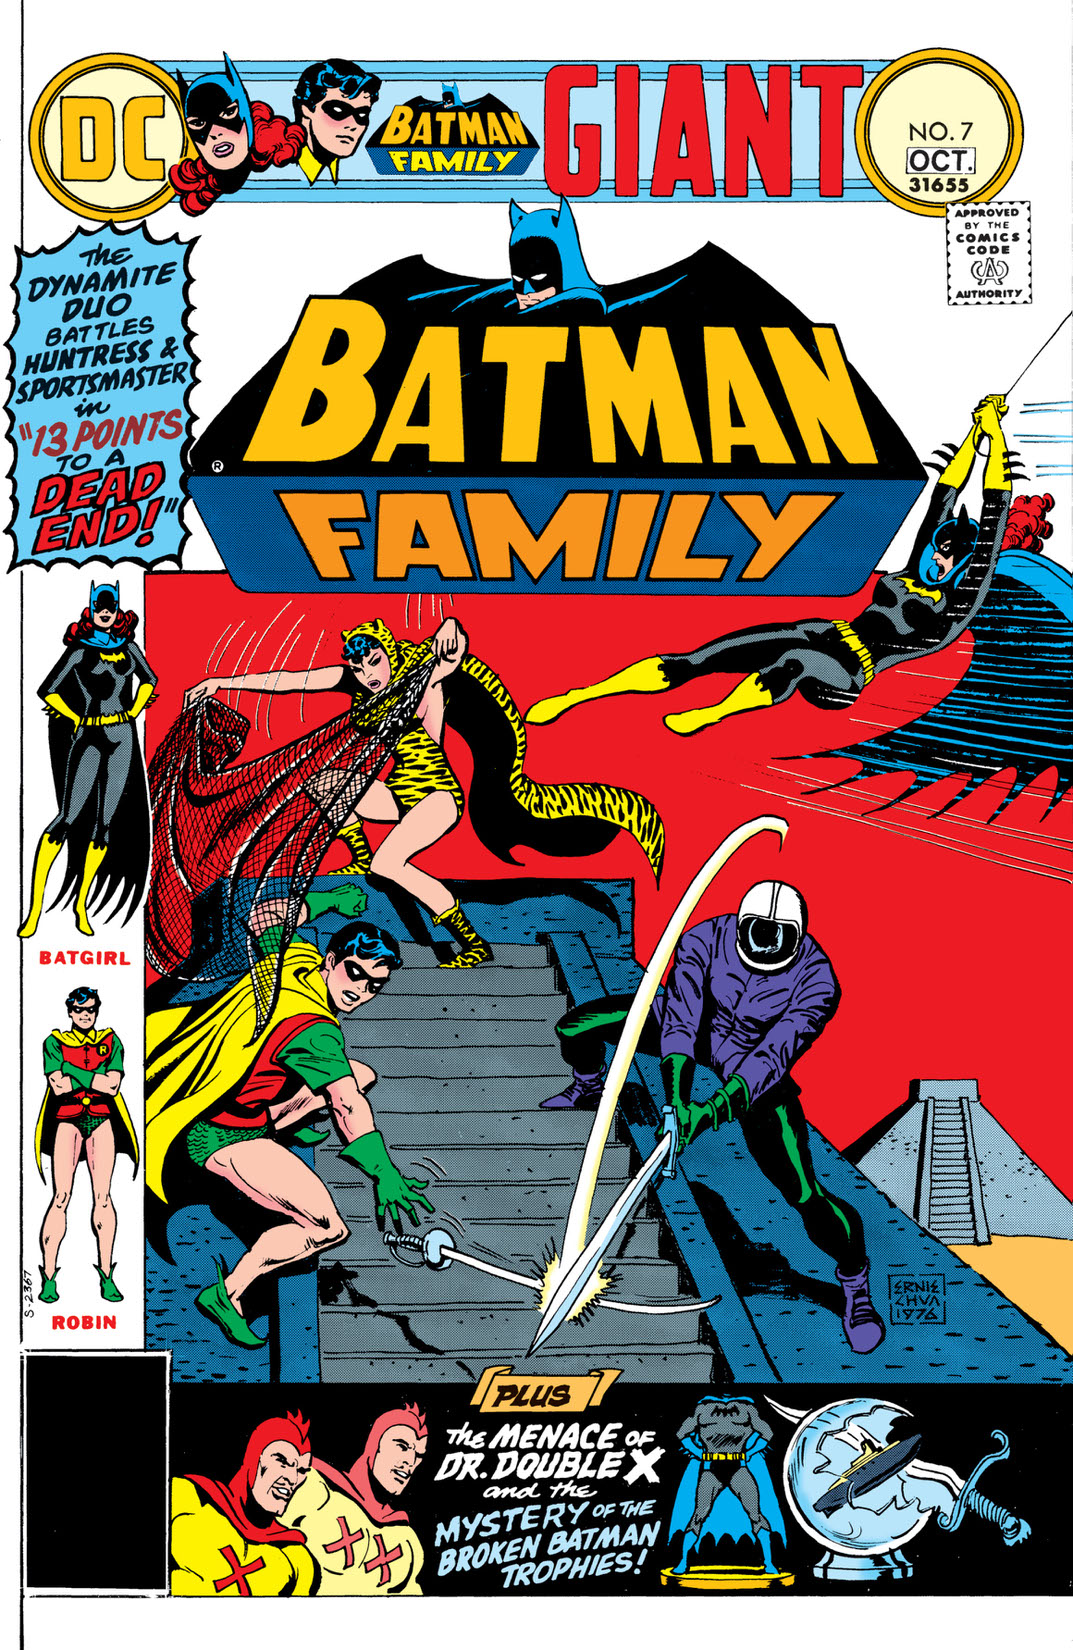 Batman Family #7 preview images